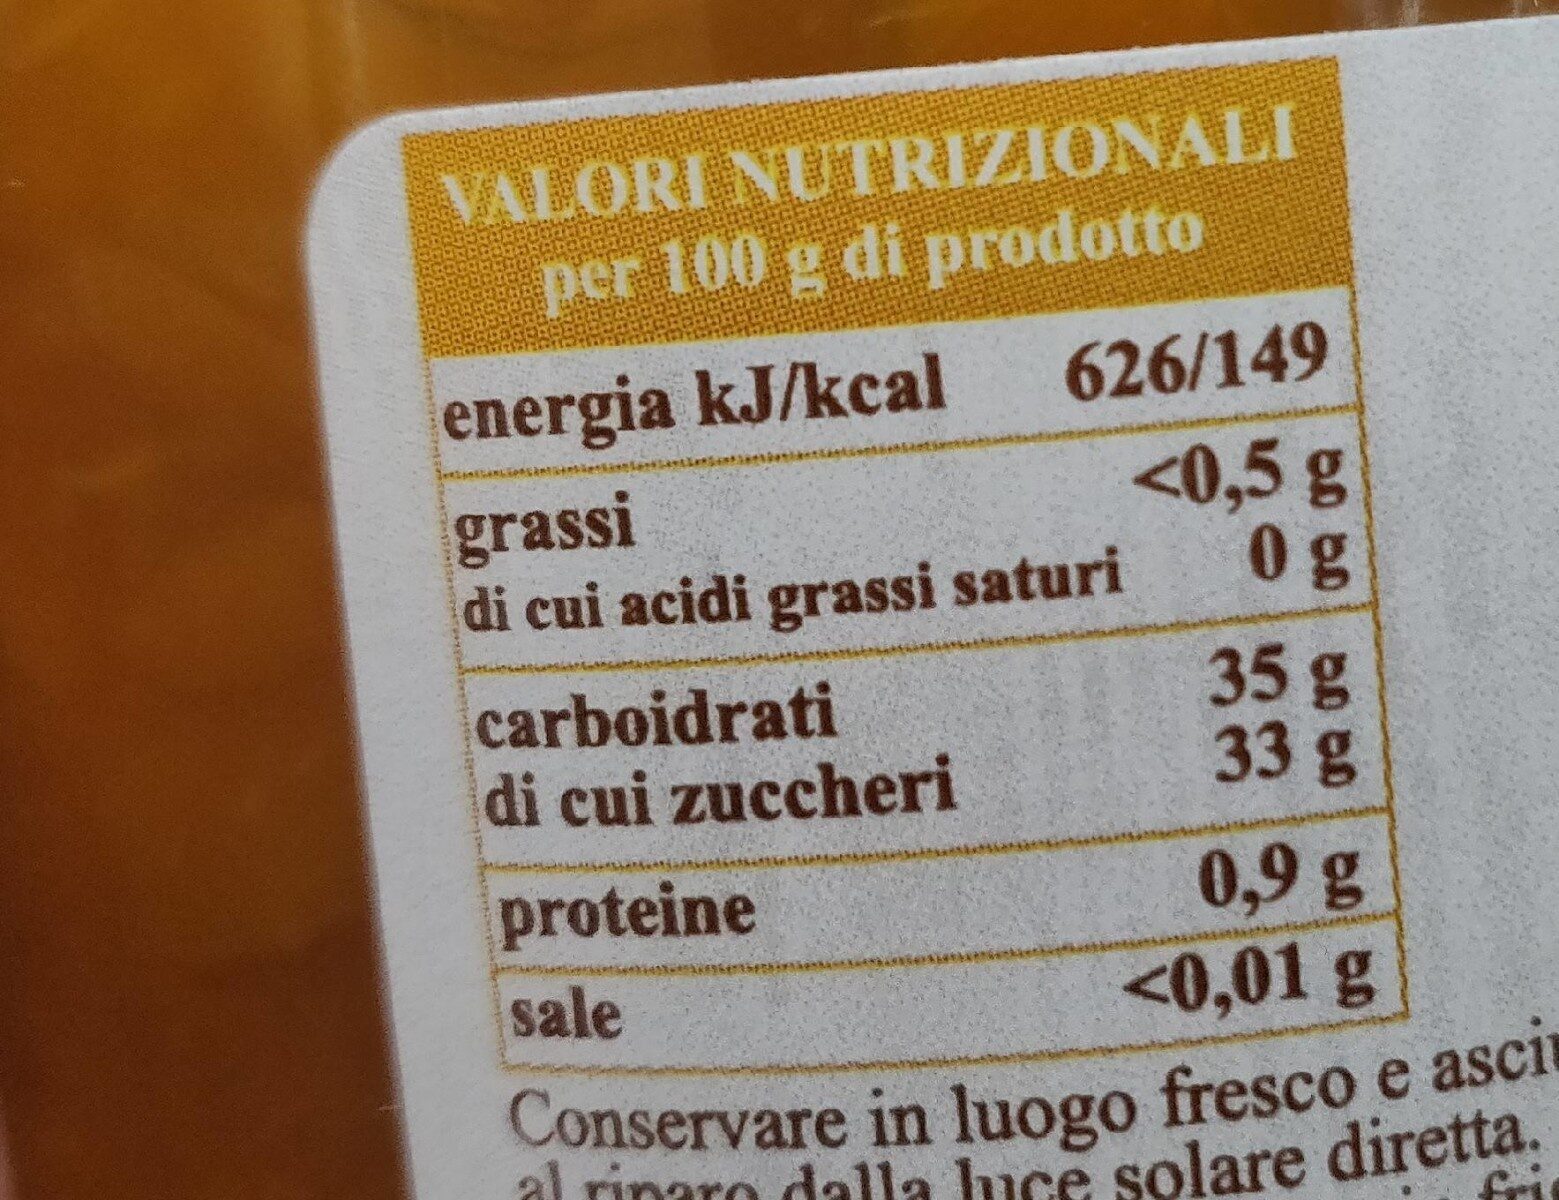 100% frutta pesche italiane - Nutrition facts - it